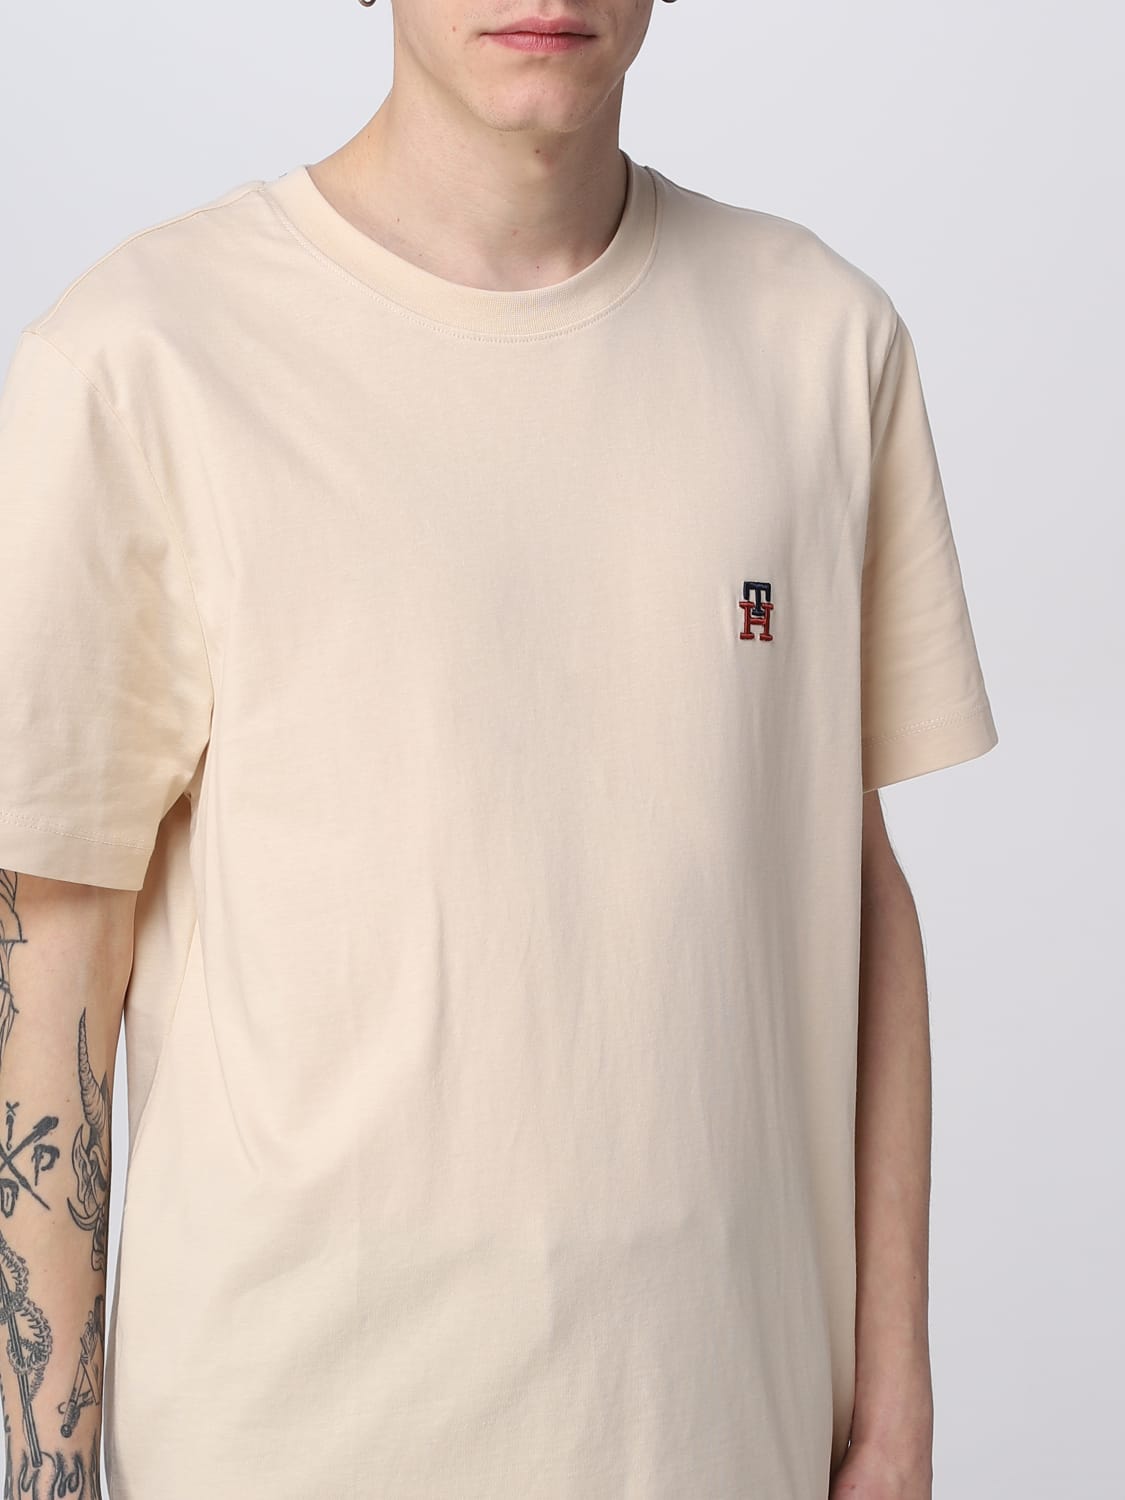 Tommy Hilfiger Outlet: t-shirt for man - Beige | Tommy Hilfiger t-shirt  MW0MW30054 online at